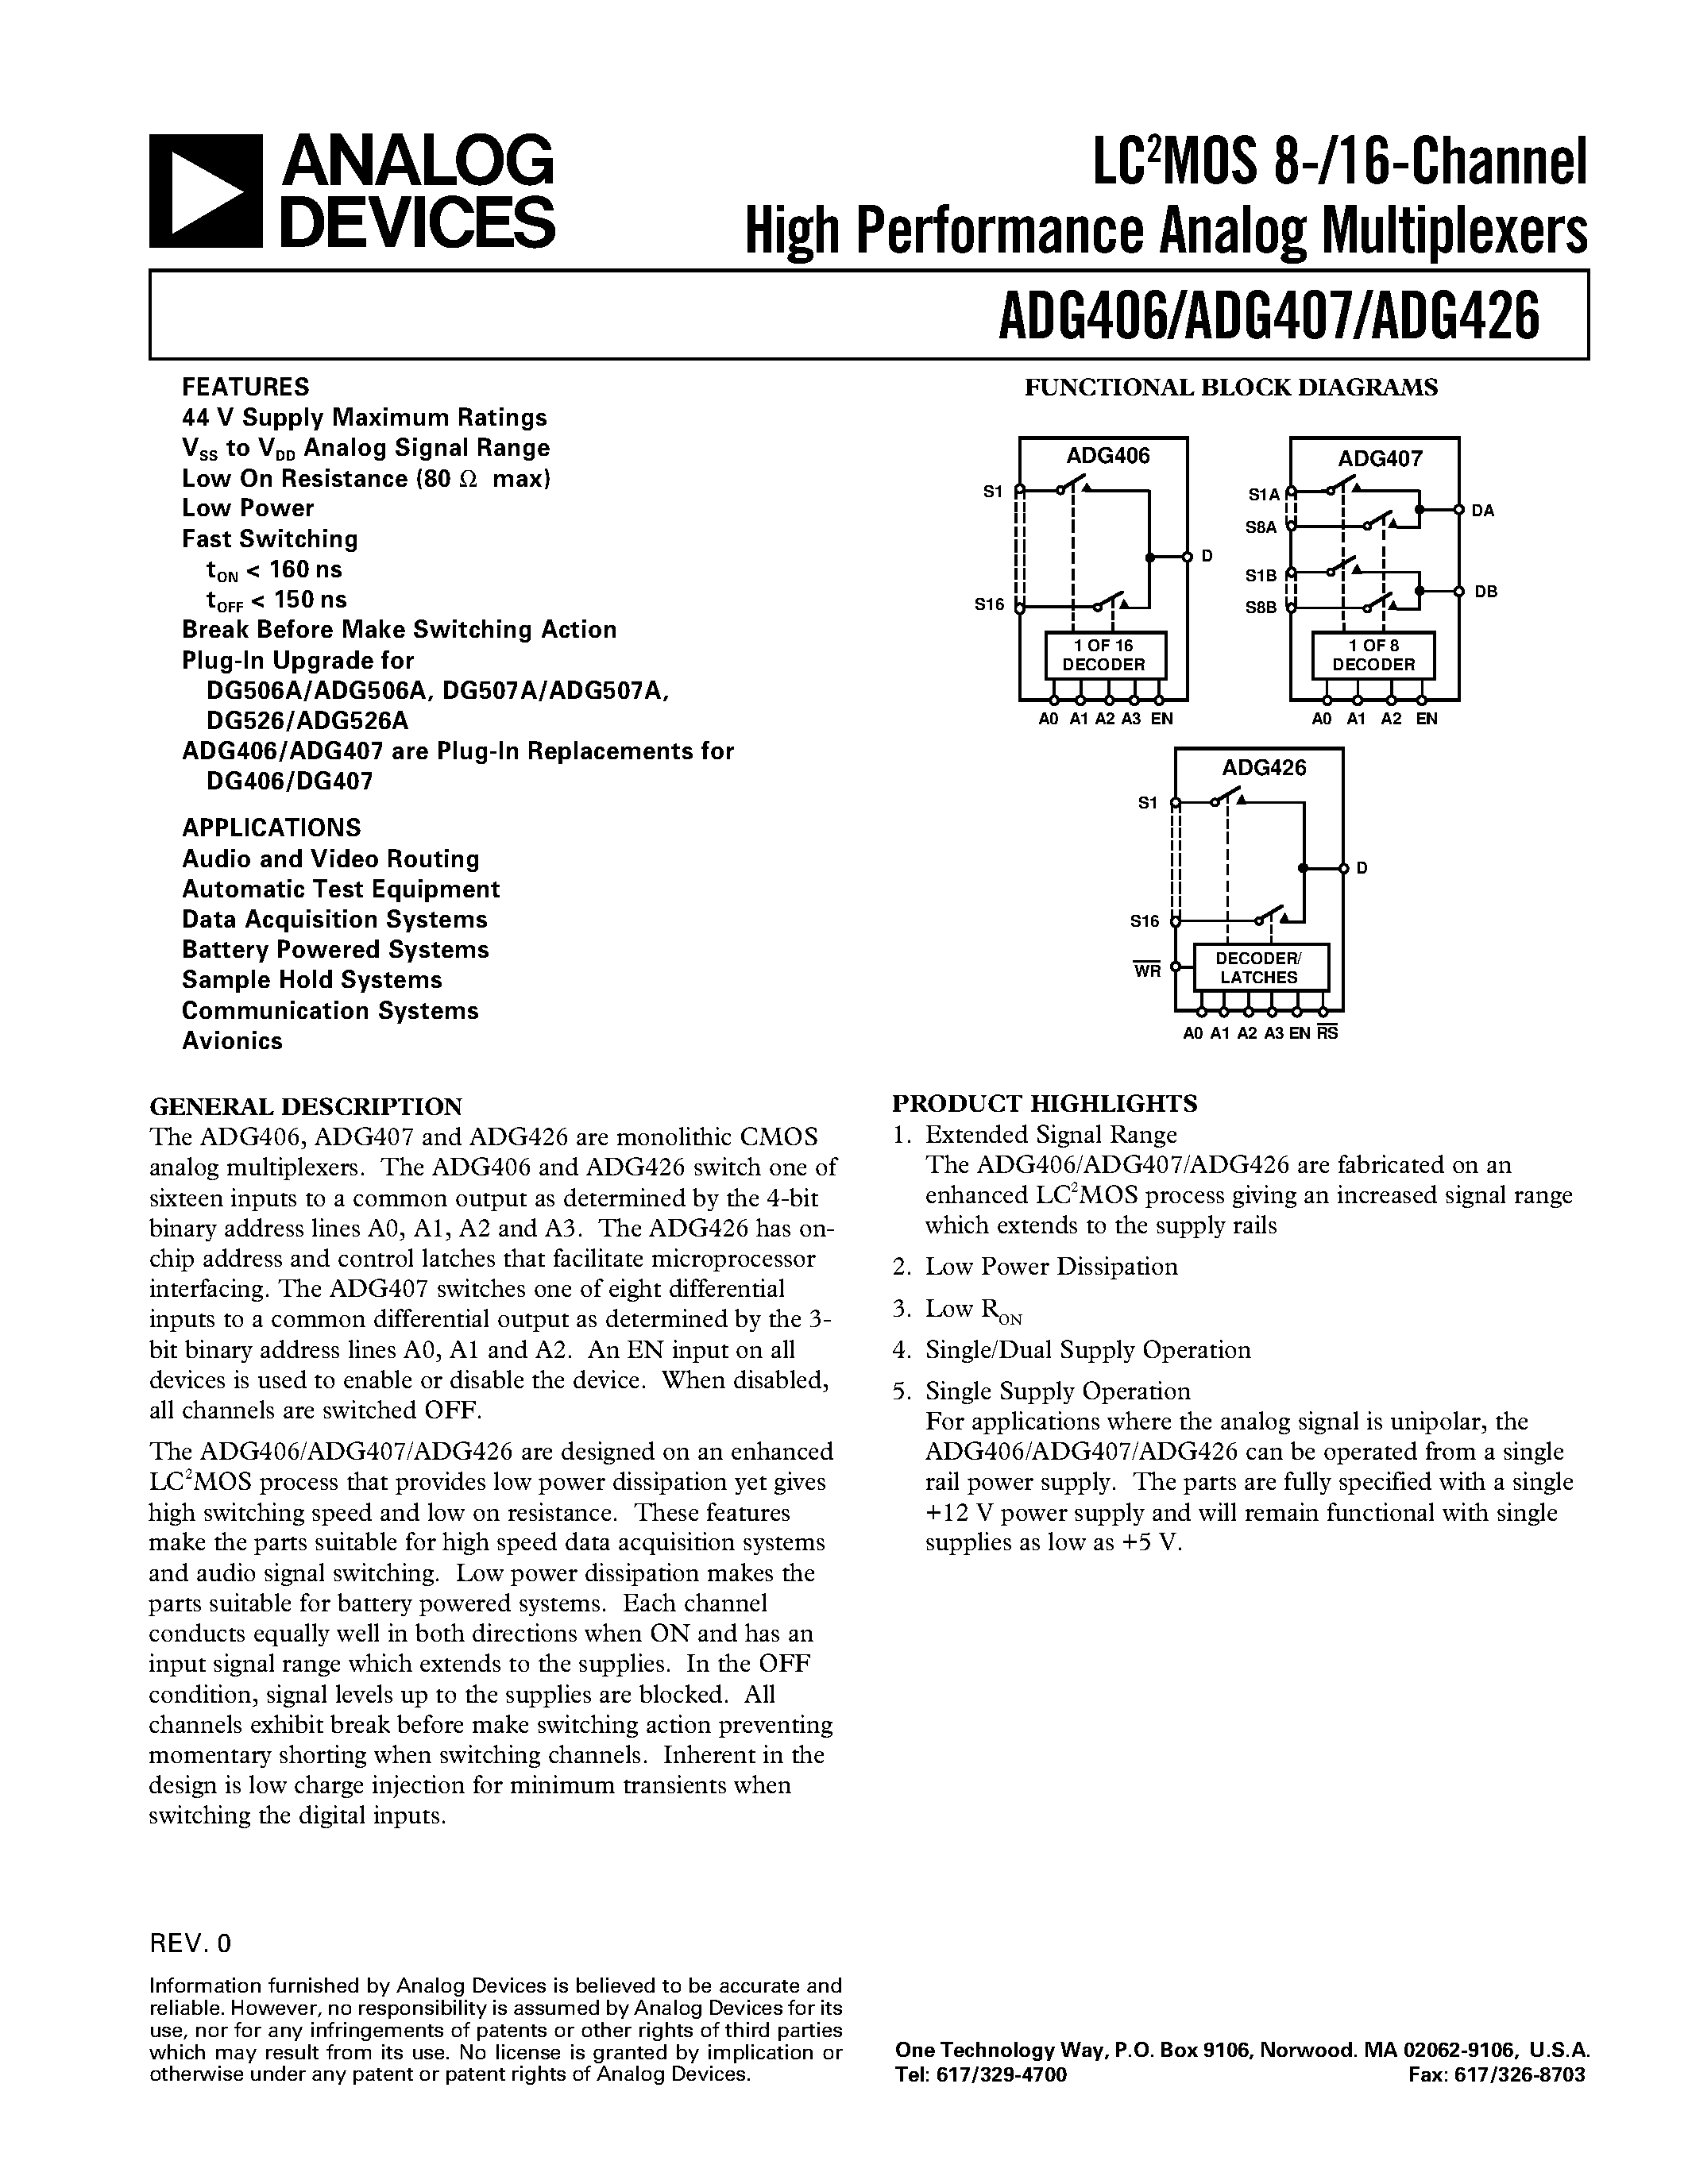 Даташит ADG406 - LC2MOS 8-/16-Channel High Performance Analog Multiplexers страница 1